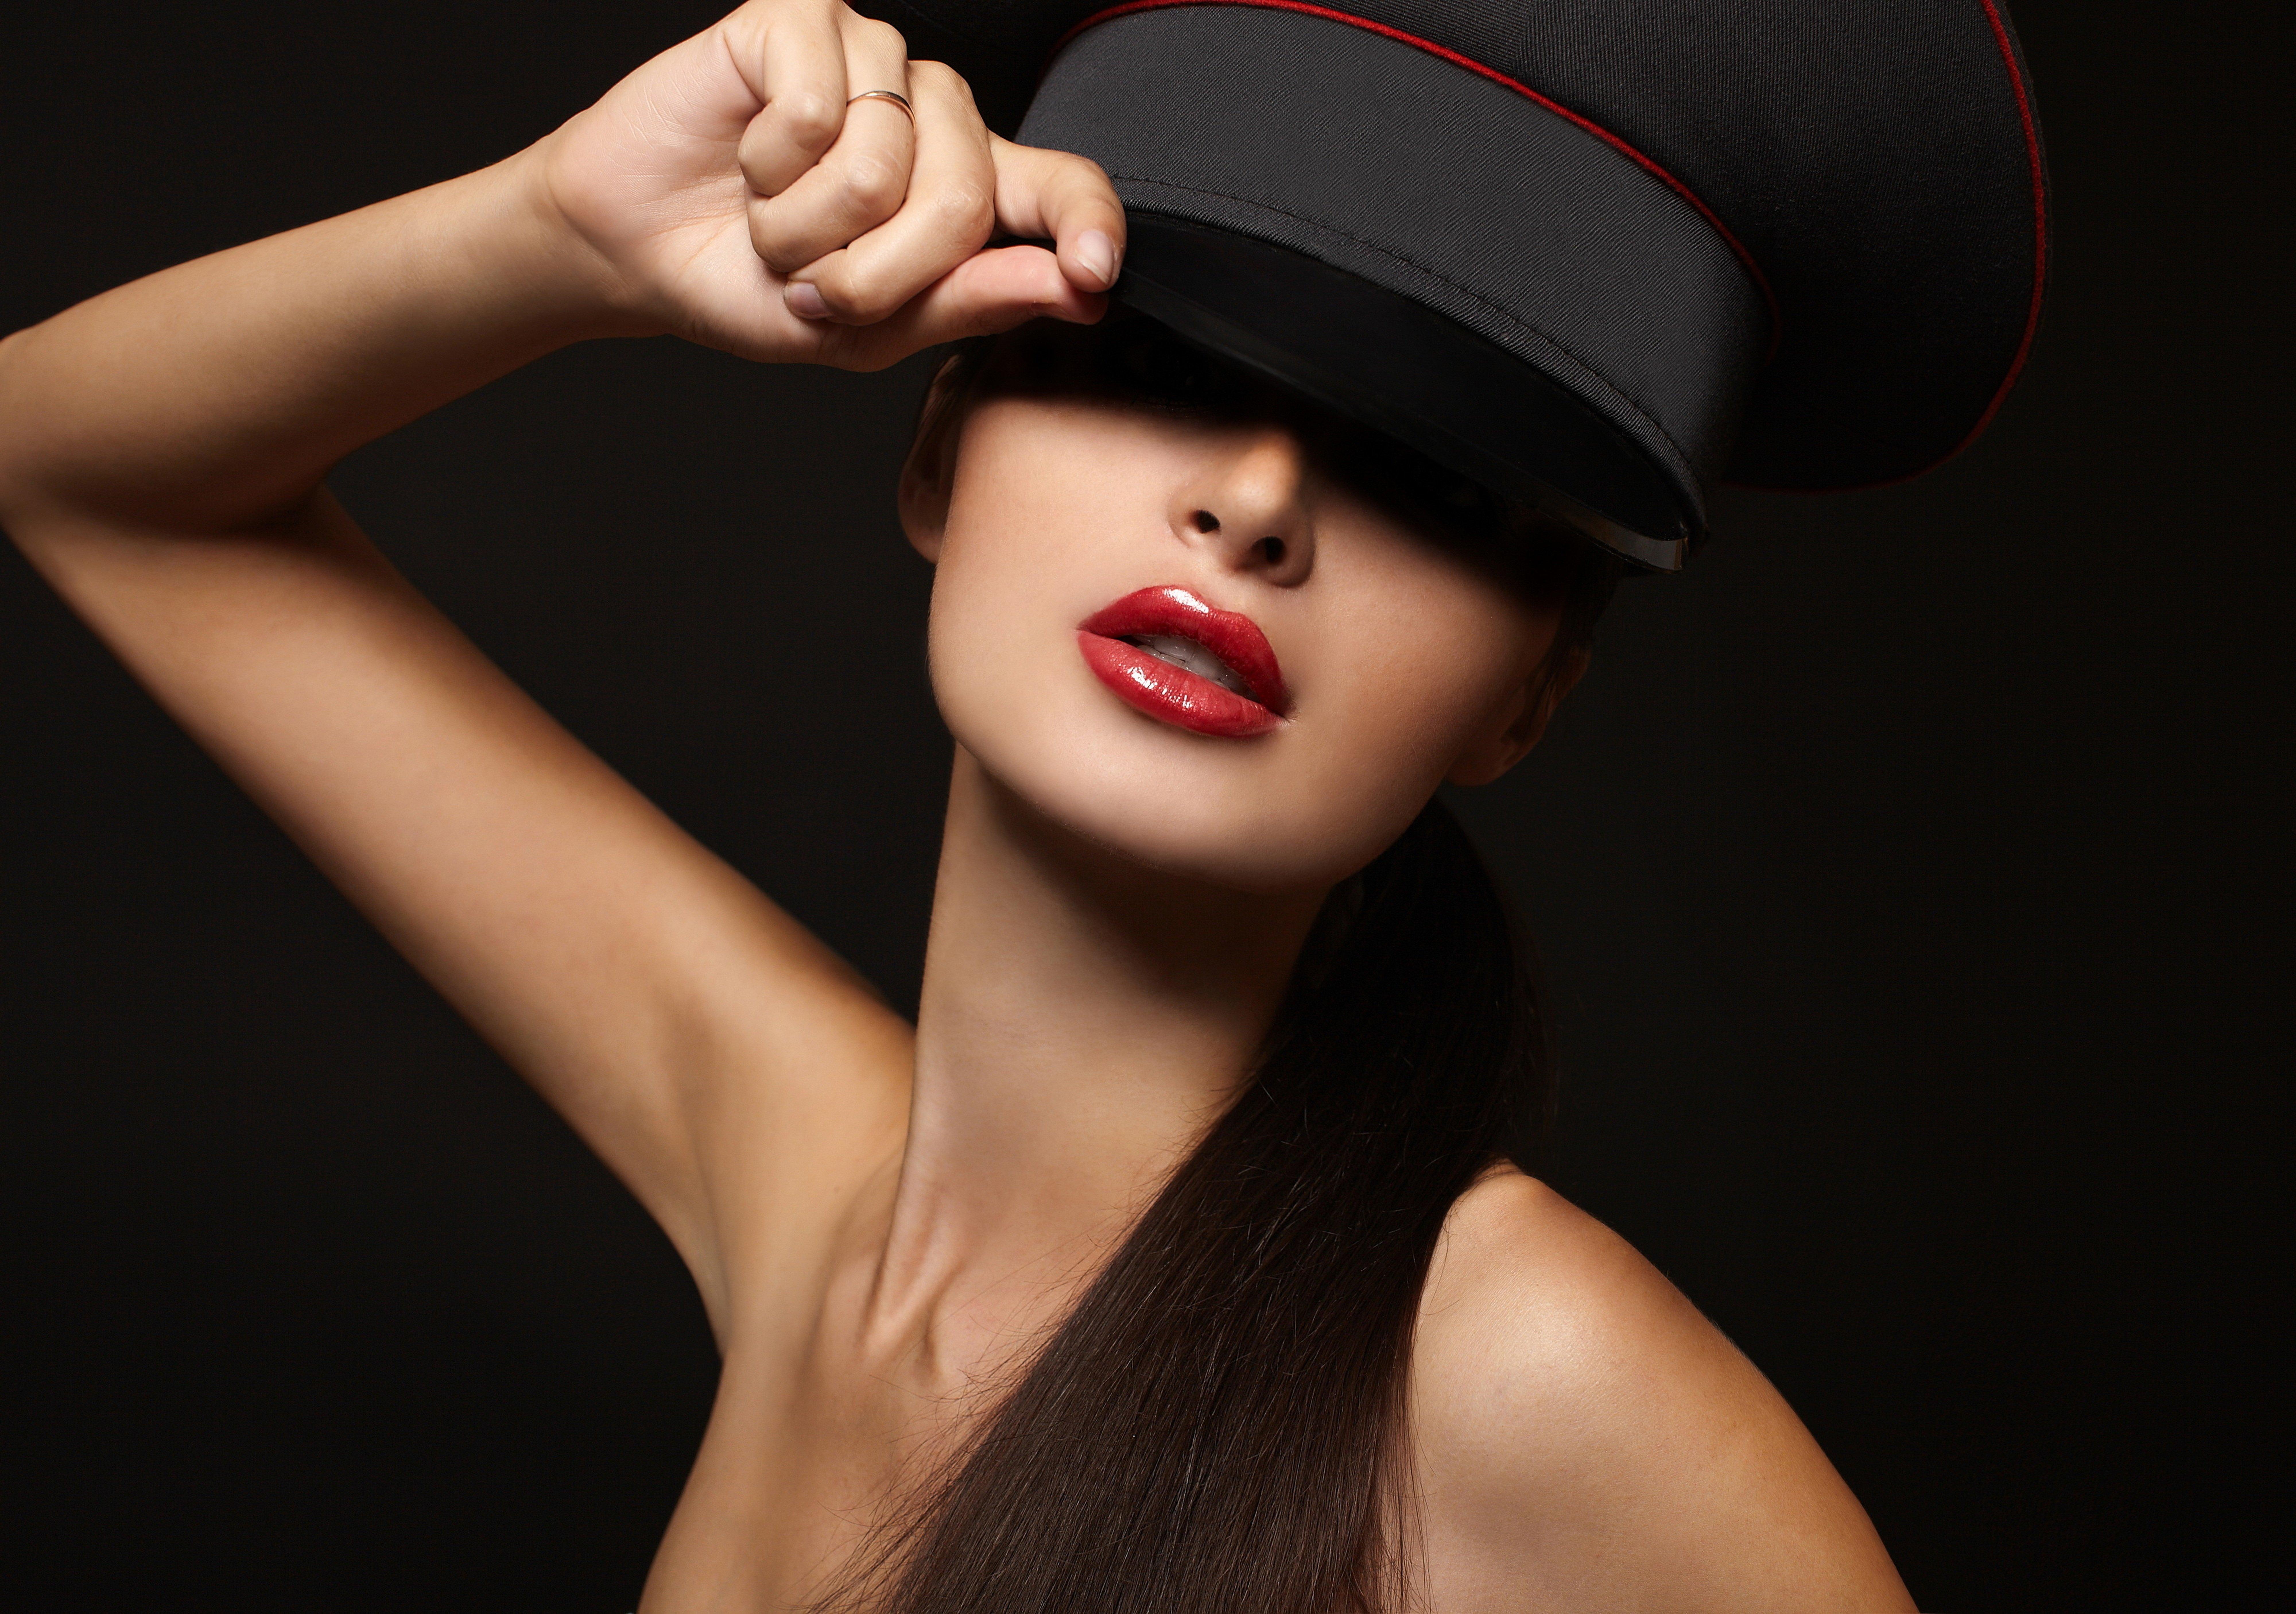 Girl model red lips lipstick face hand hair shoulders black background wallpaperx5622